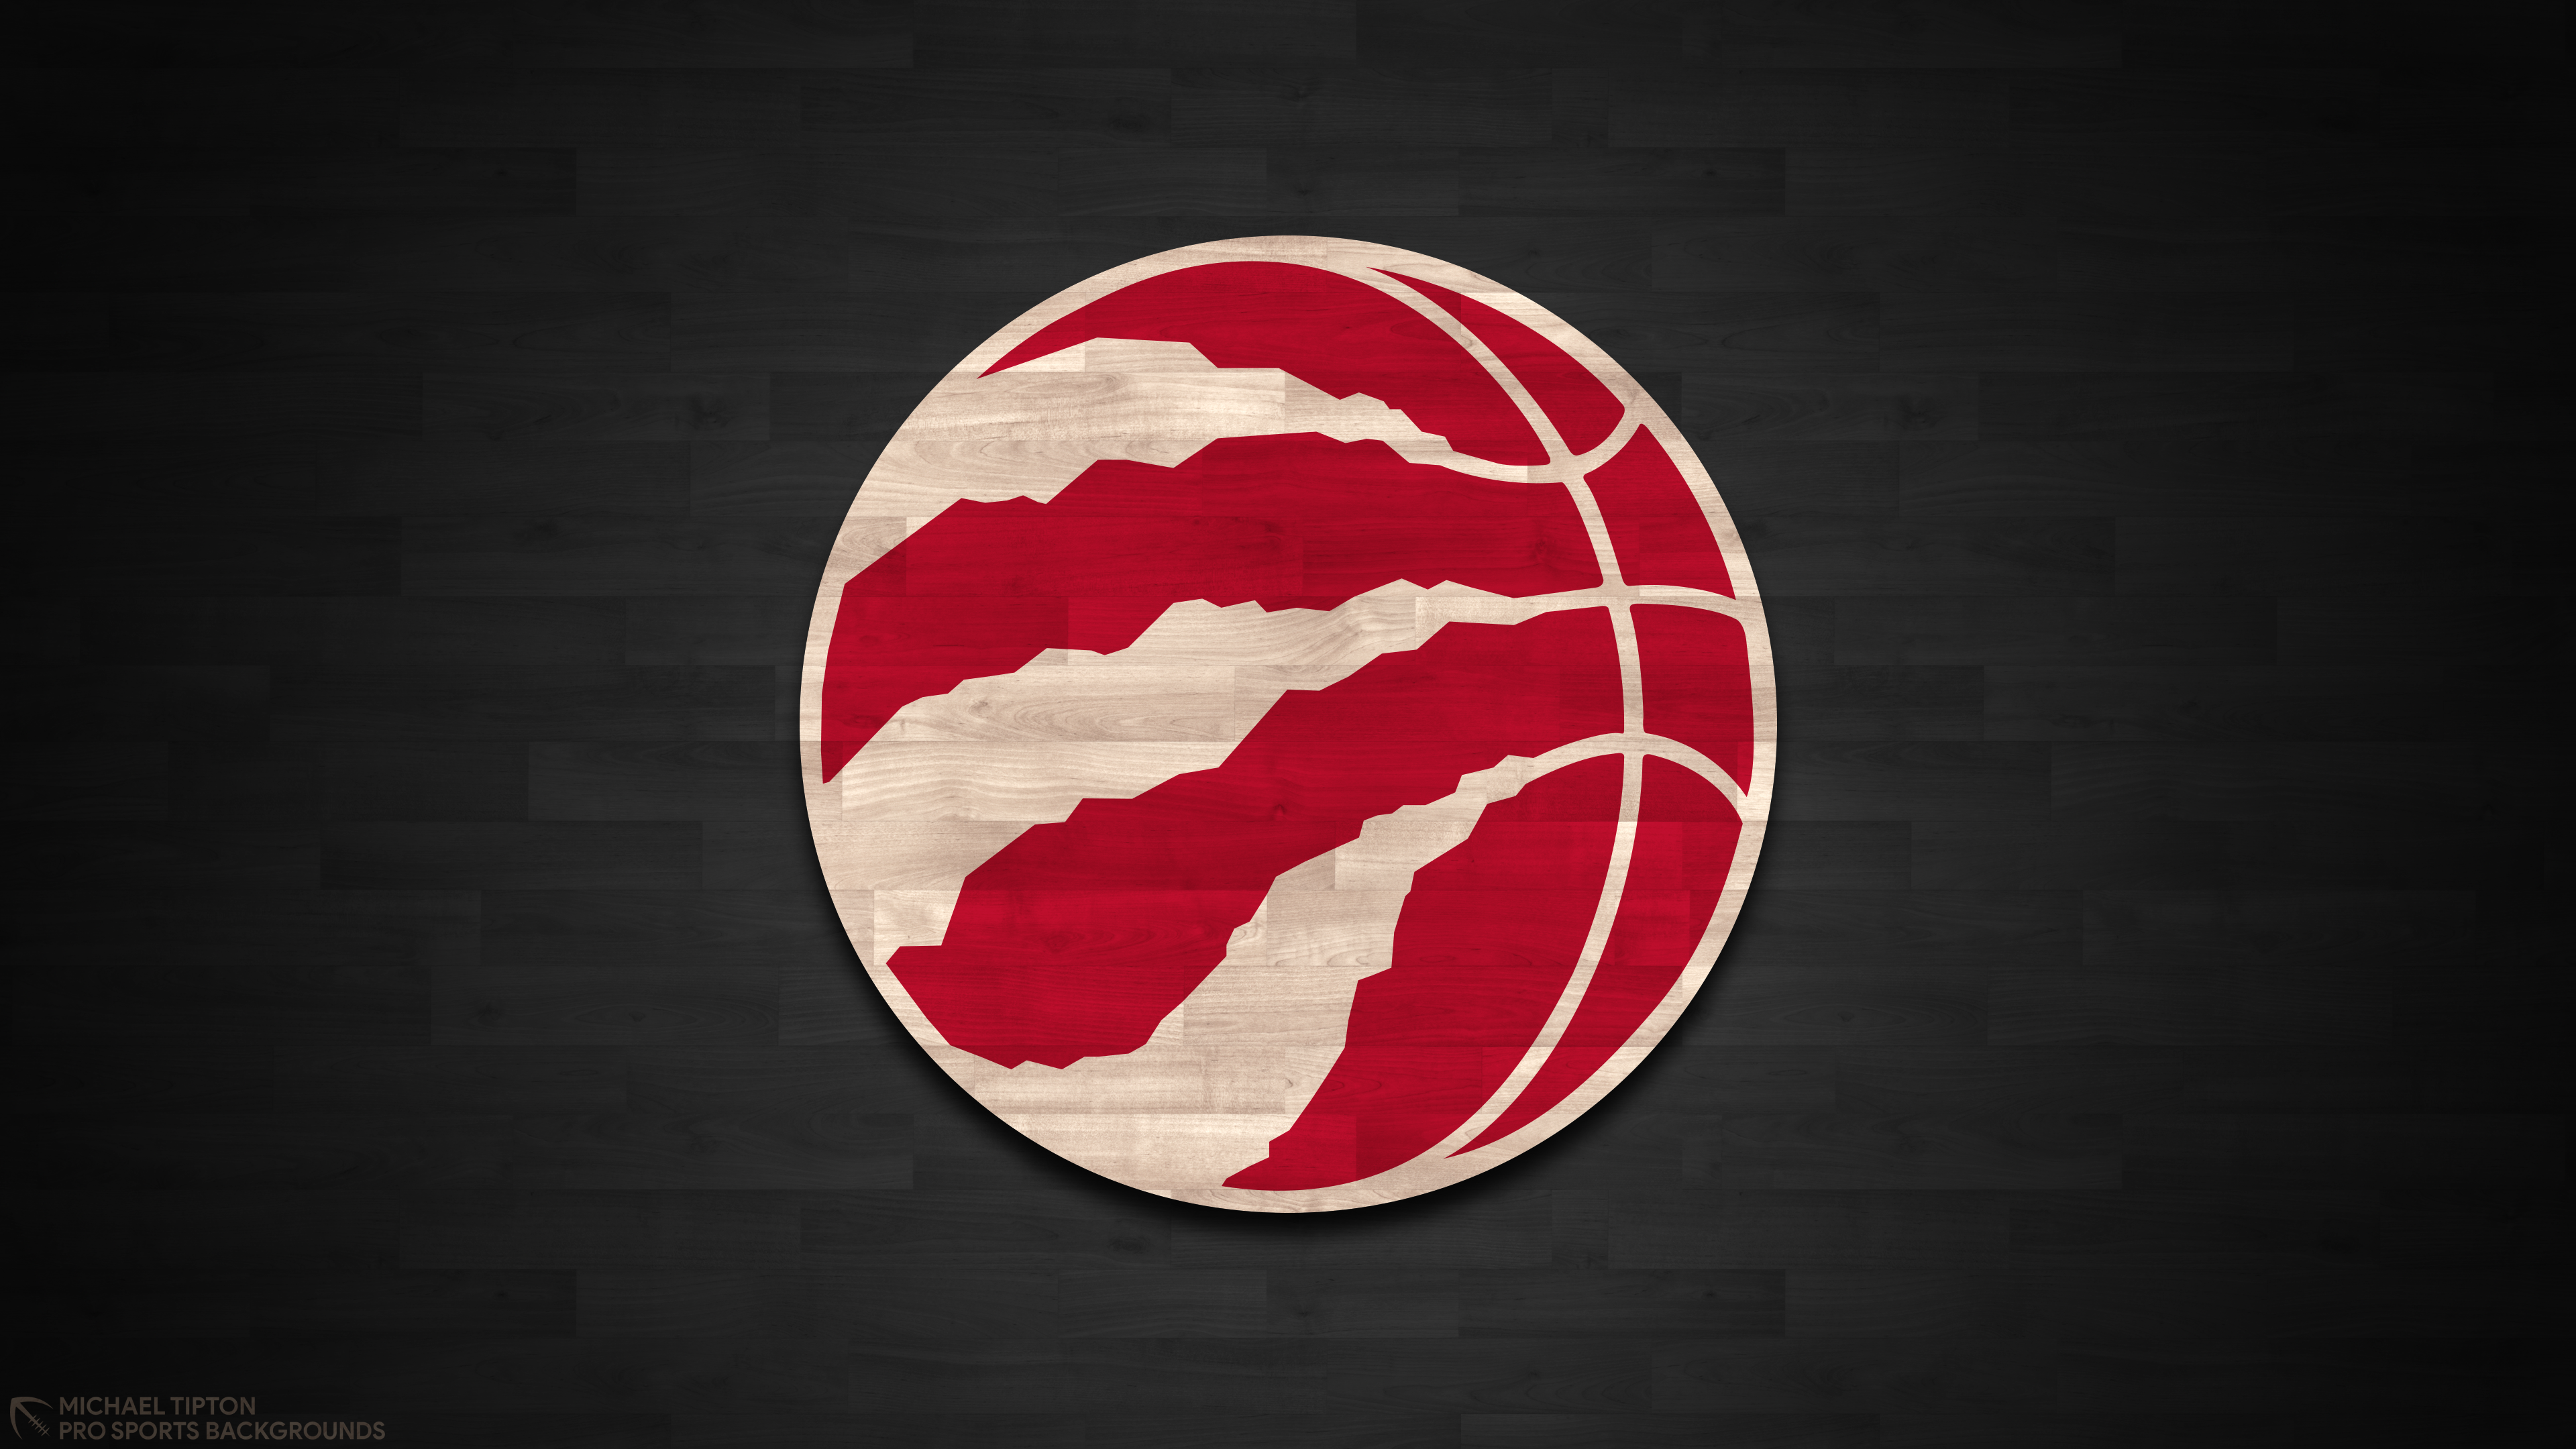 Toronto Raptors 4k Ultra HD Wallpaper  Background Image  3840x2160